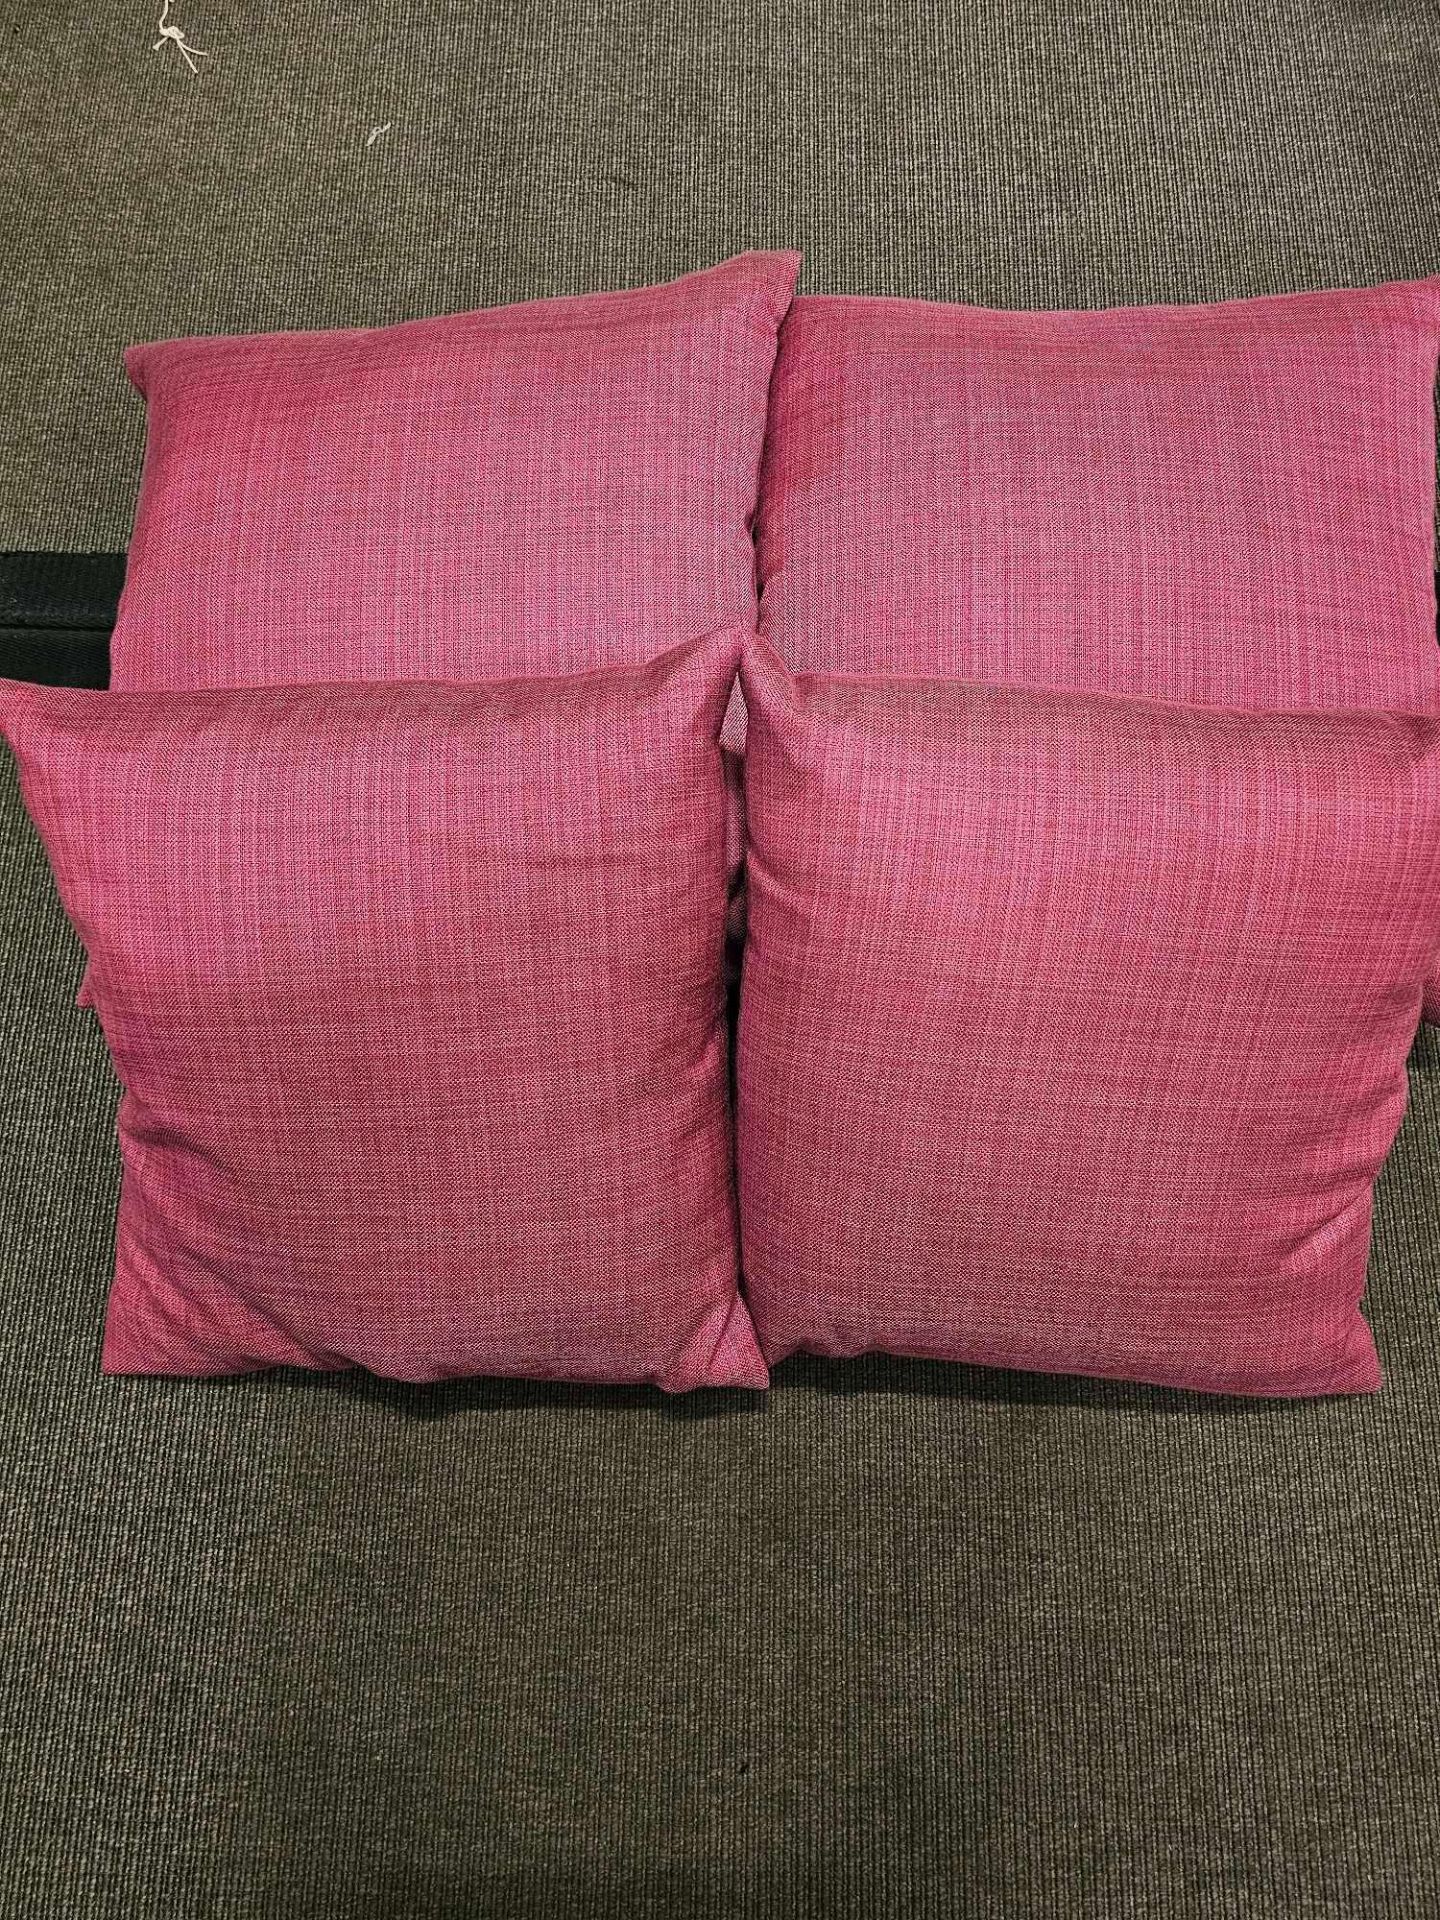 4 x Silk Pink Cushions Size 45 x 45 And 40 x 40cm ( Ref Cush 124)